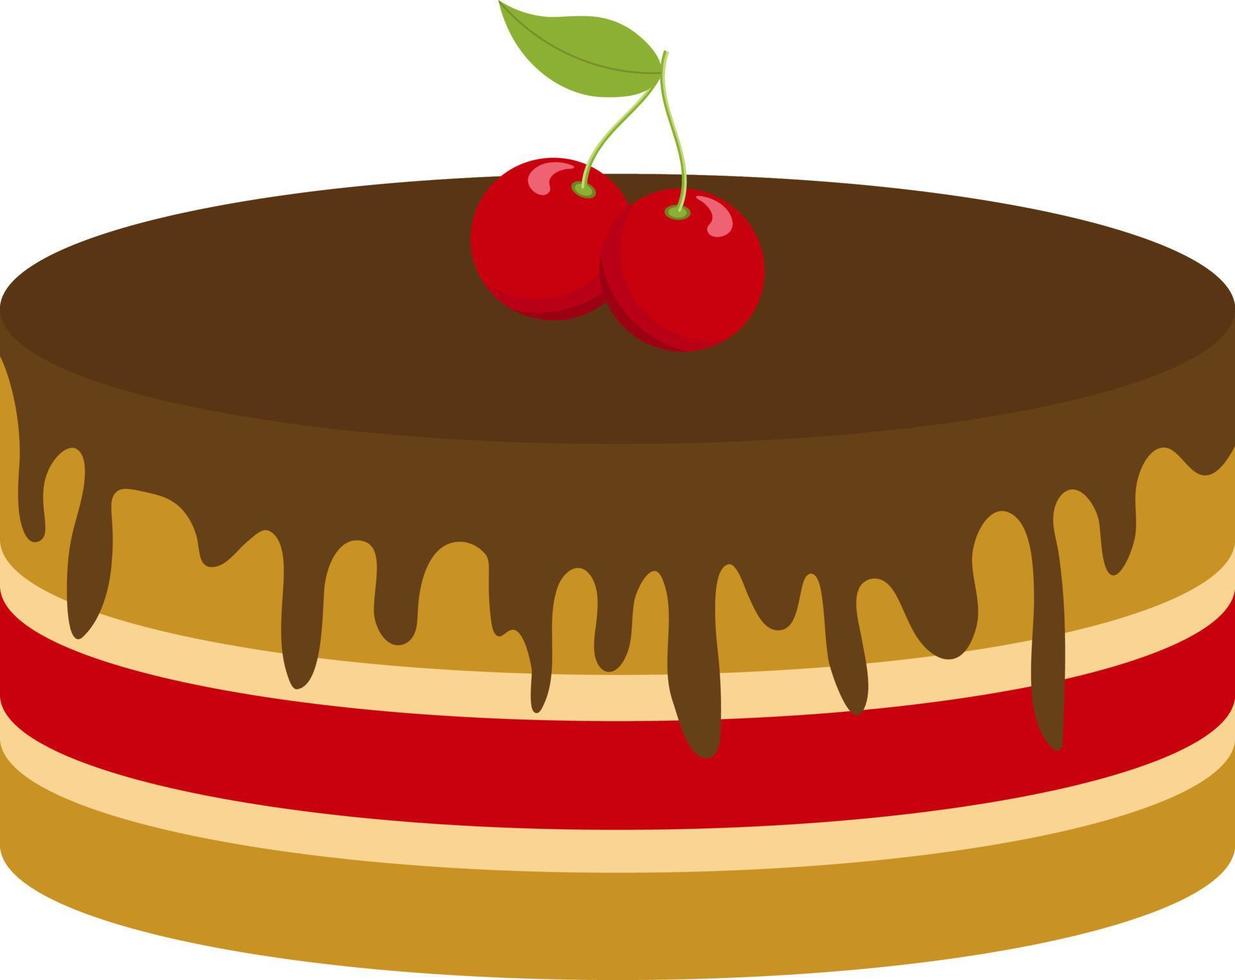 Cherry cake on a white background. Vector illustration.